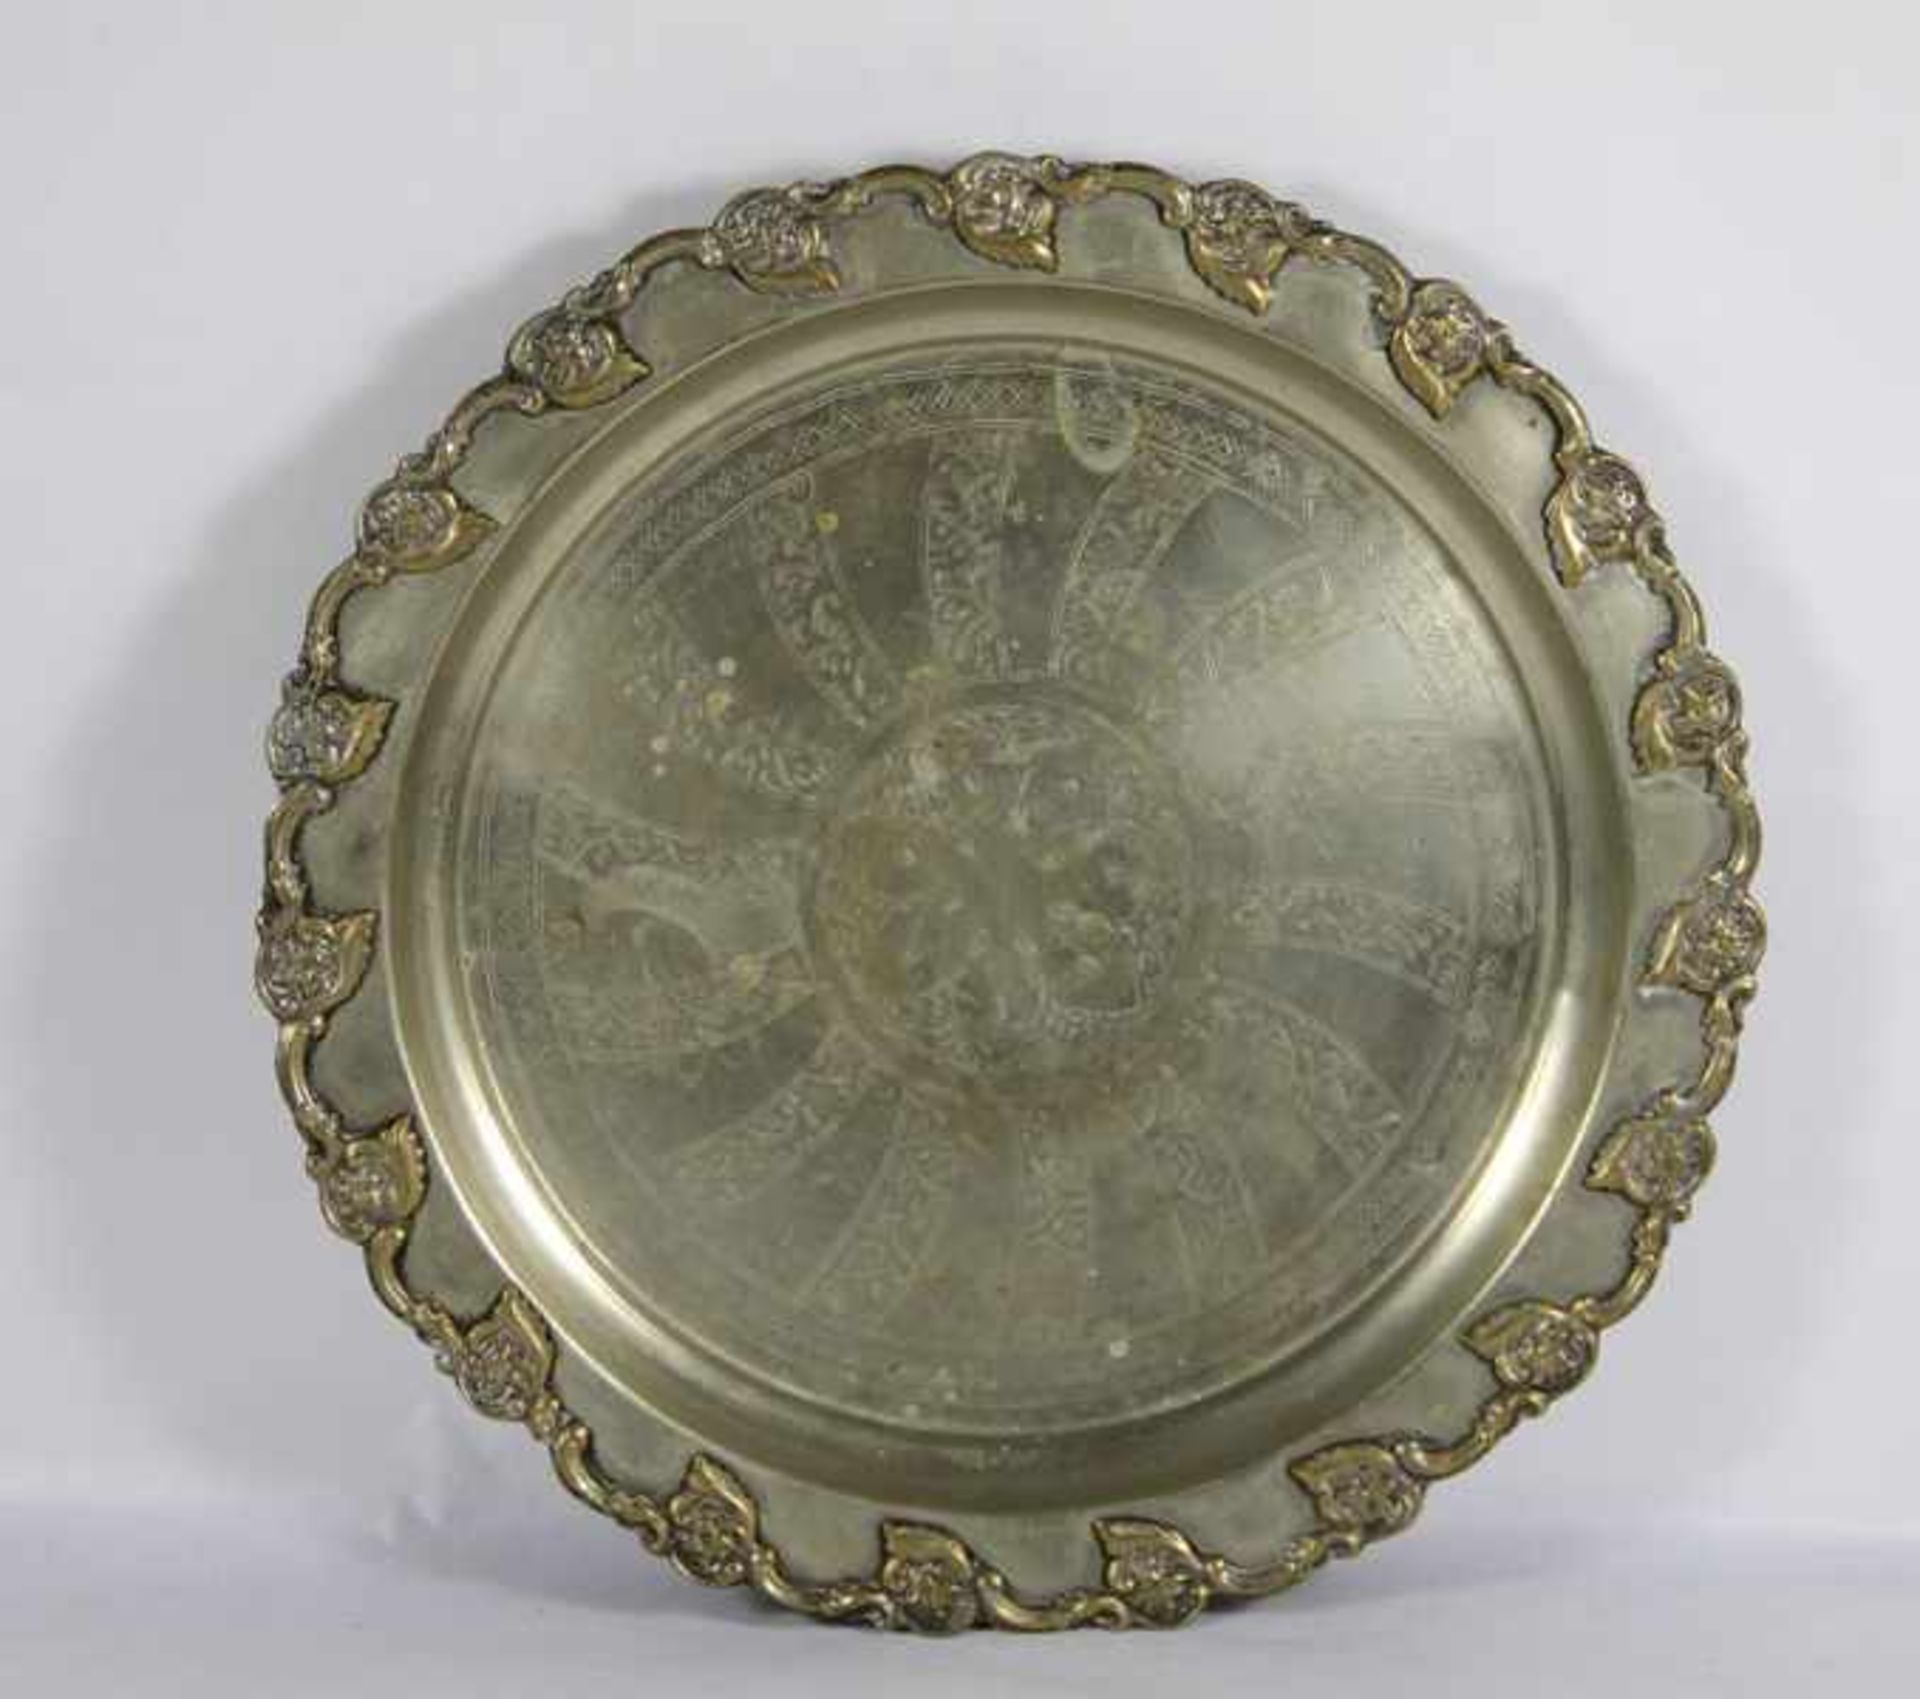 großes Tablettgroßes rundes Tablett, Metall, wohl Zinn, gewellter Rand mit Blütendekor, im Fond